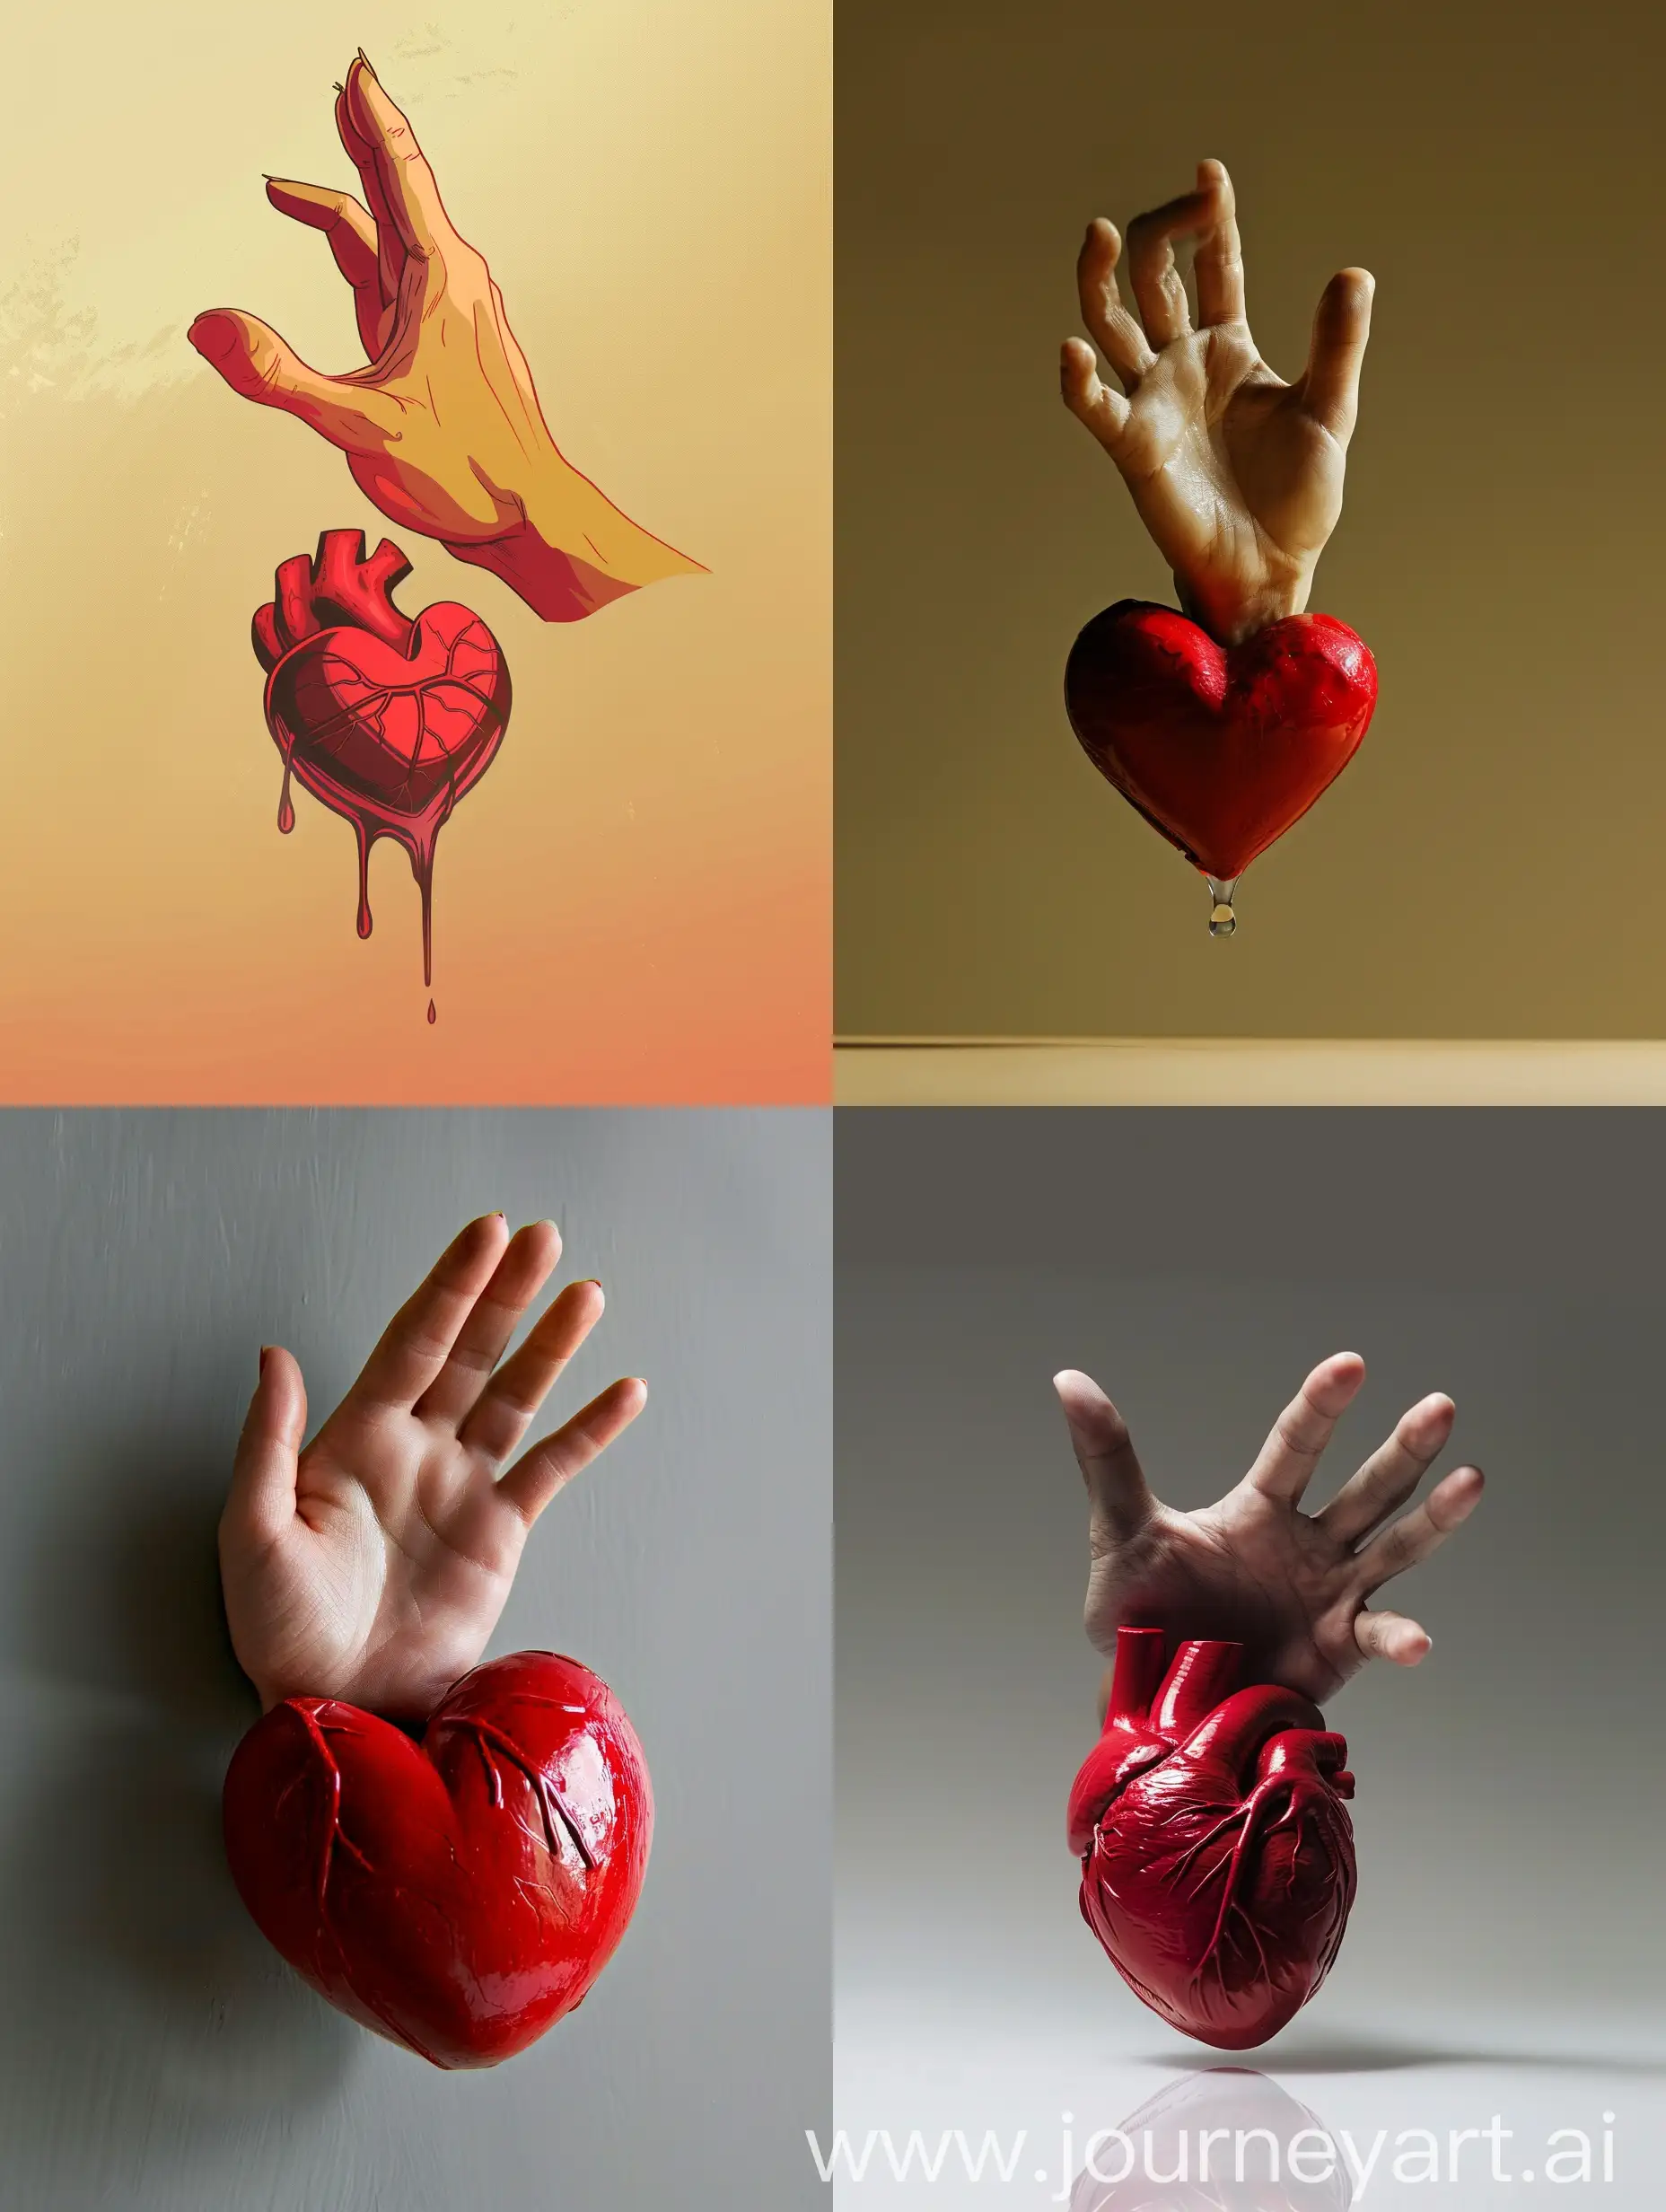 Heart-Reaching-Hand-Symbolic-Gesture-of-Love